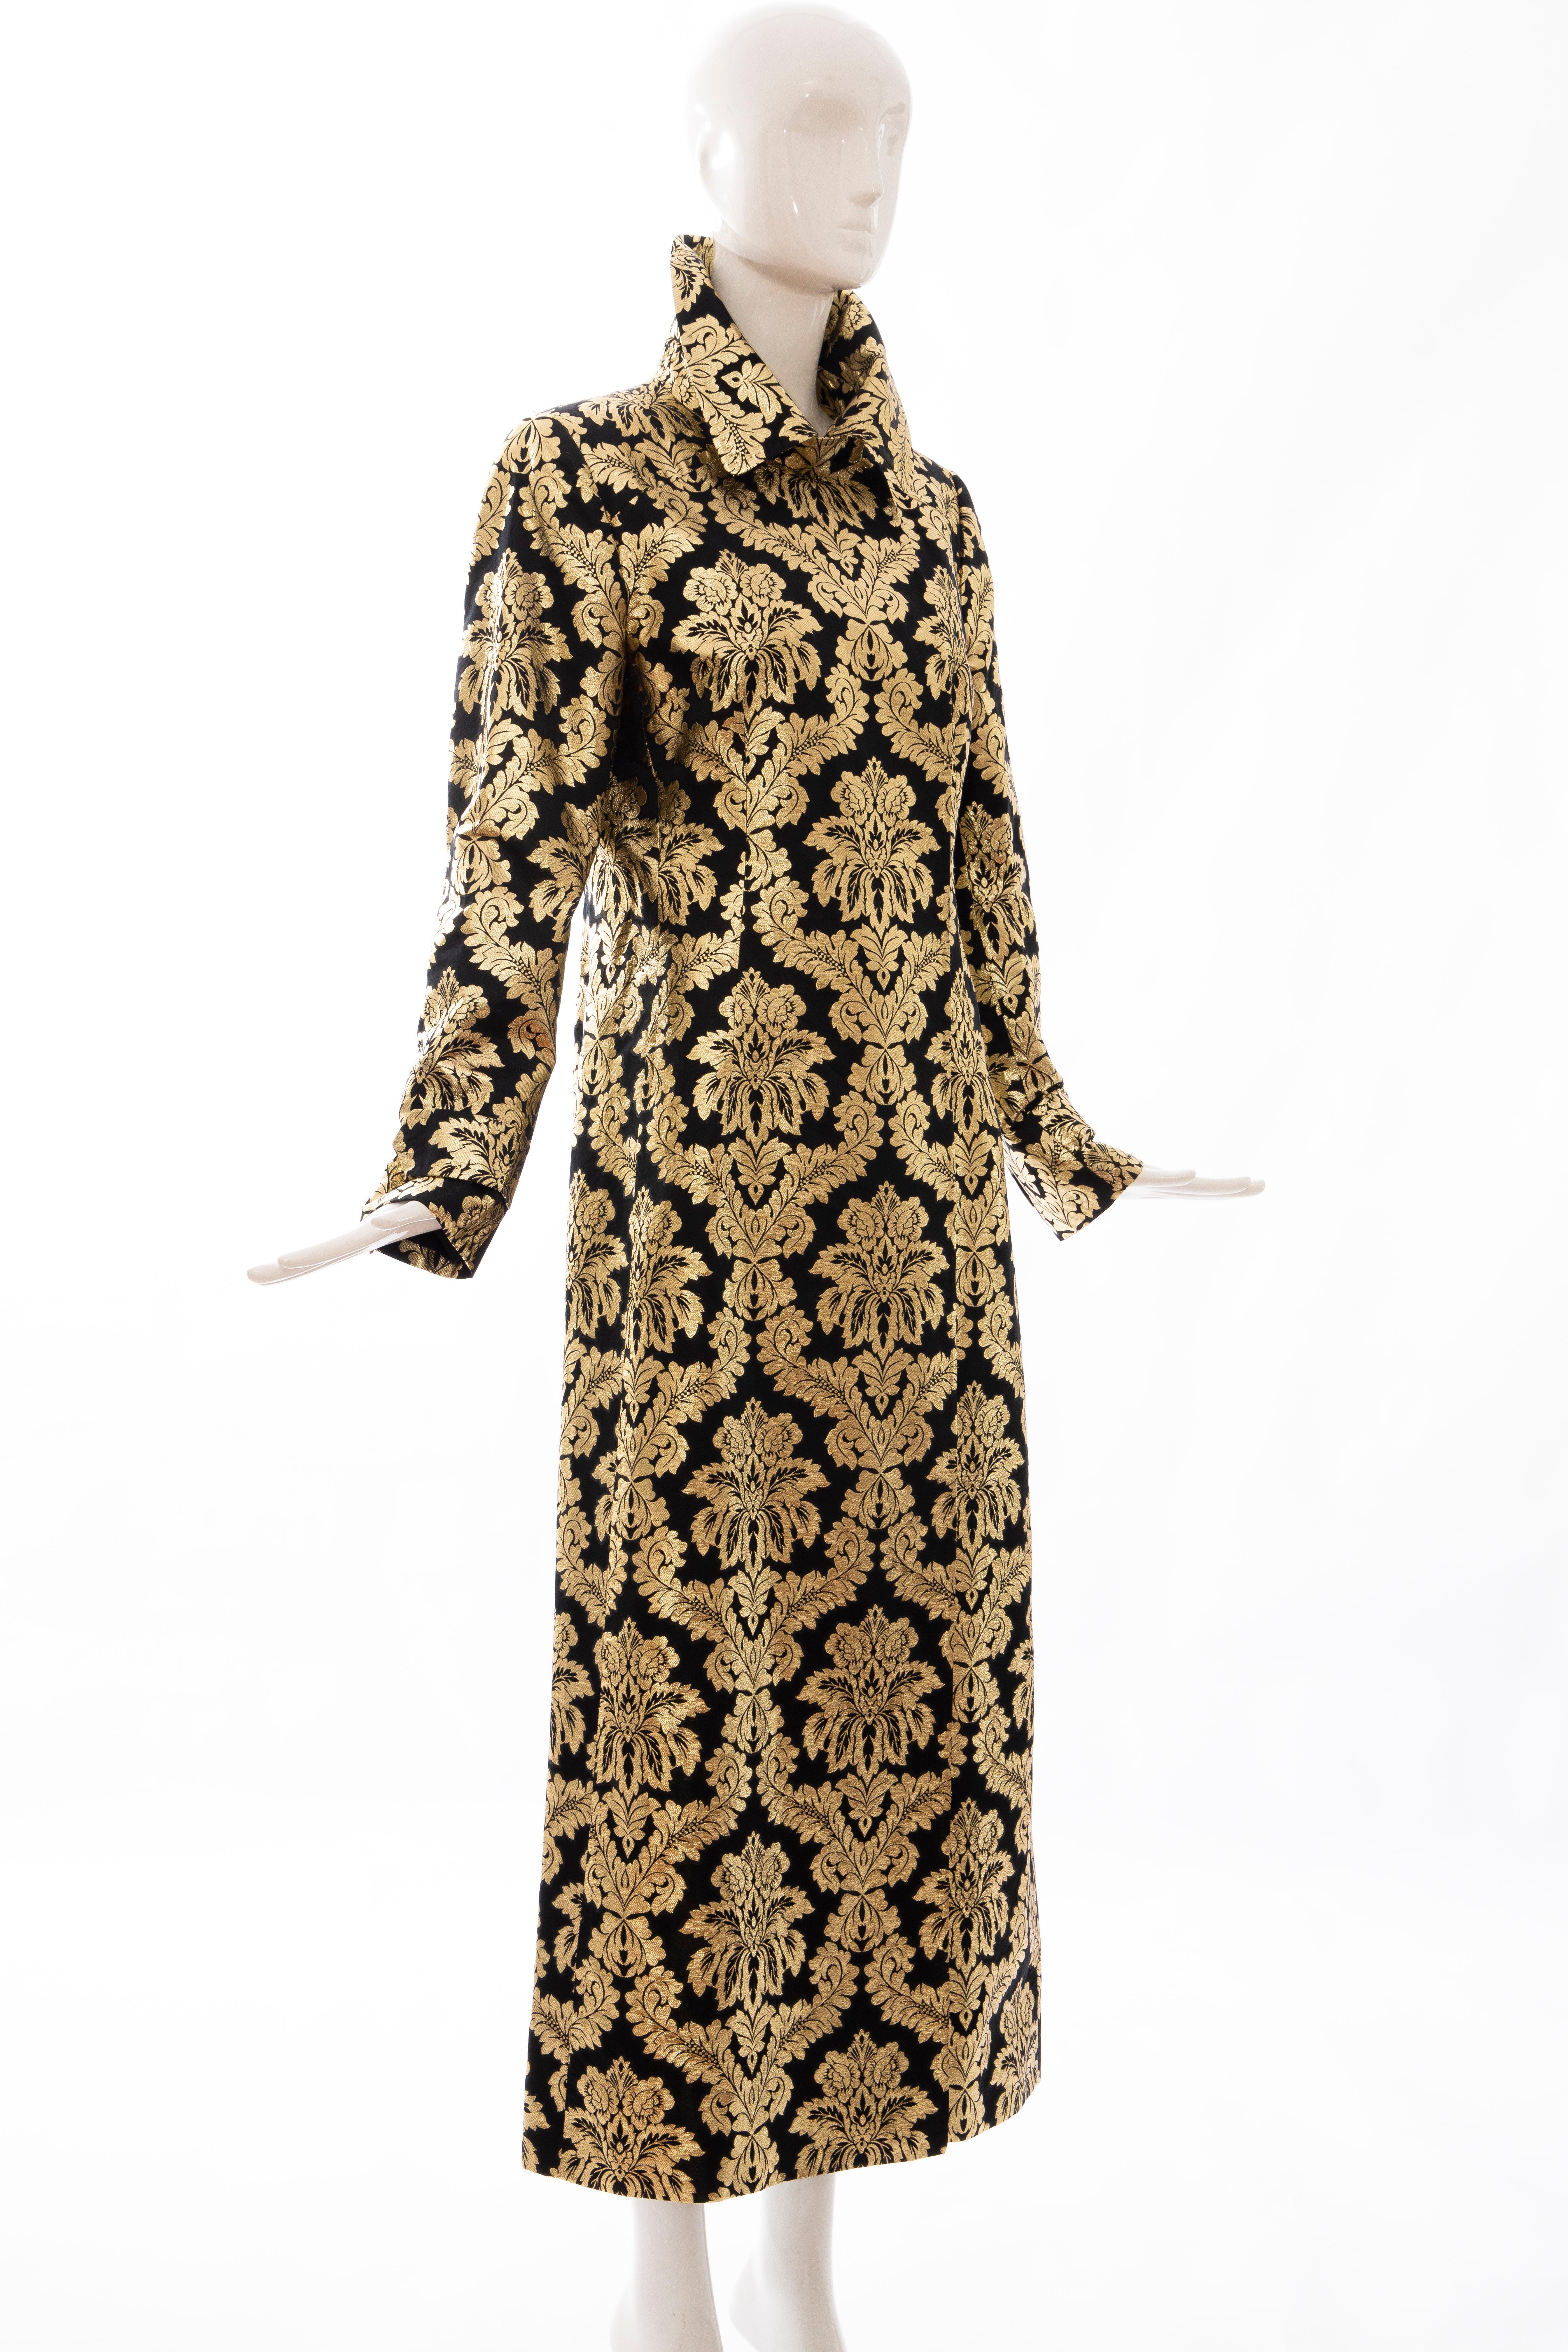 Brown Dolce & Gabbana Runway Black Silk Gold Floral Brocade Evening Coat, Fall 2000 For Sale